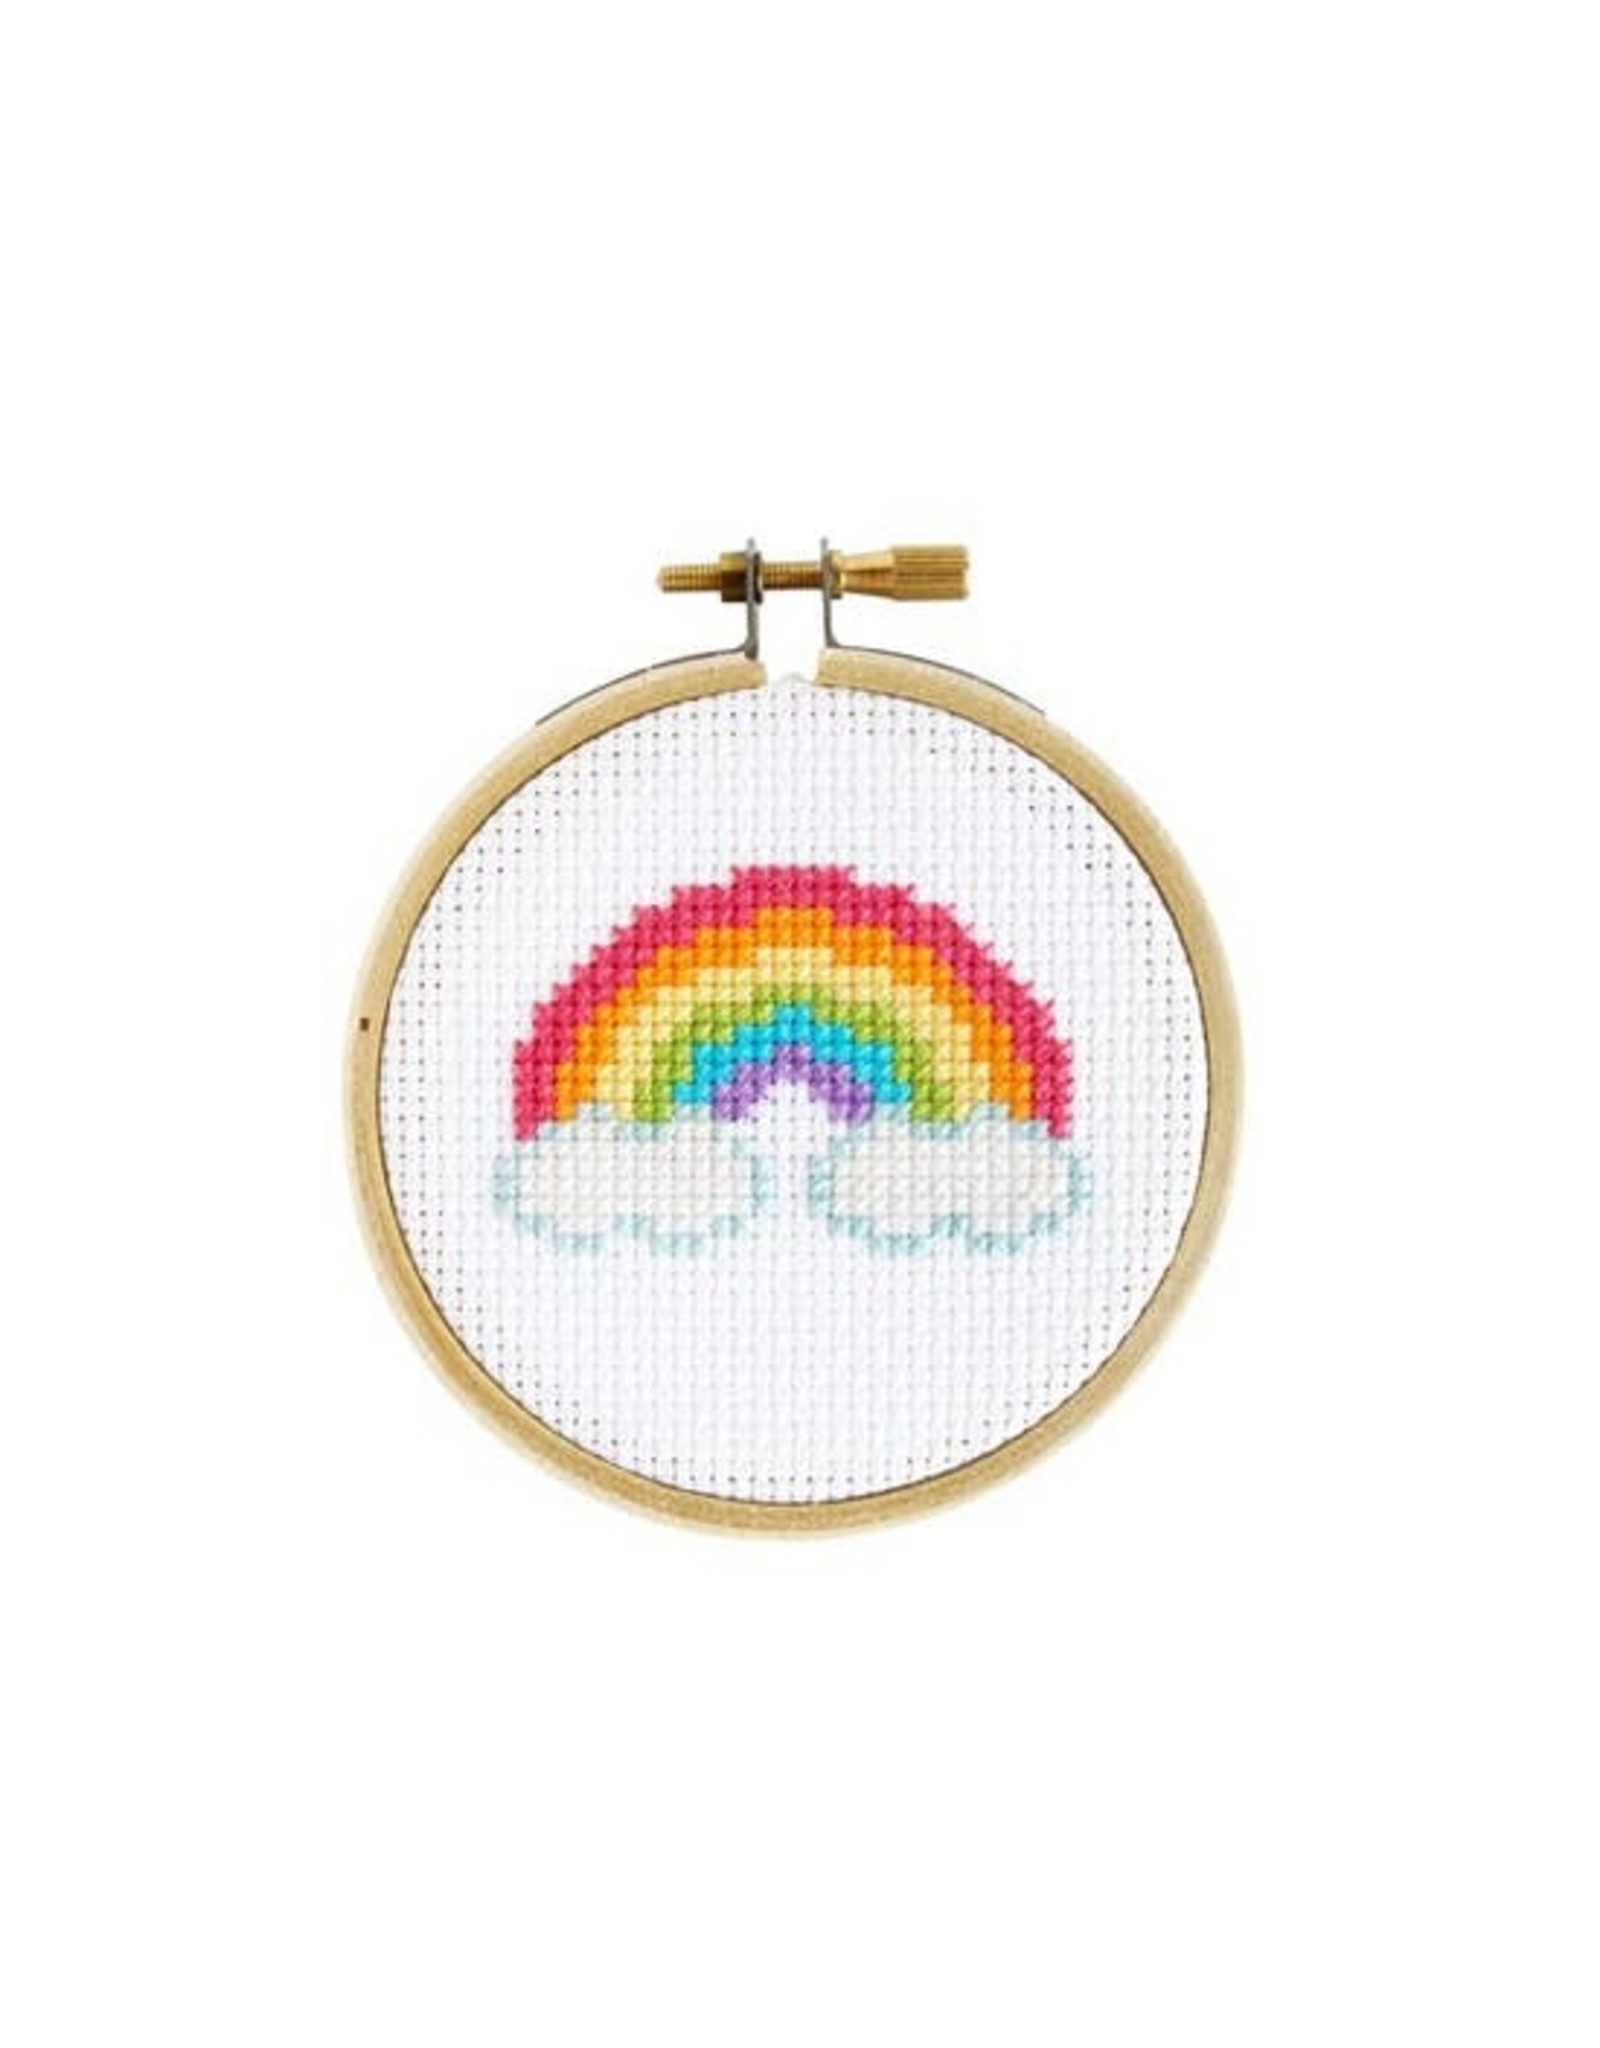 The Stranded Stitch Mini Rainbow Cross Stitch Kit